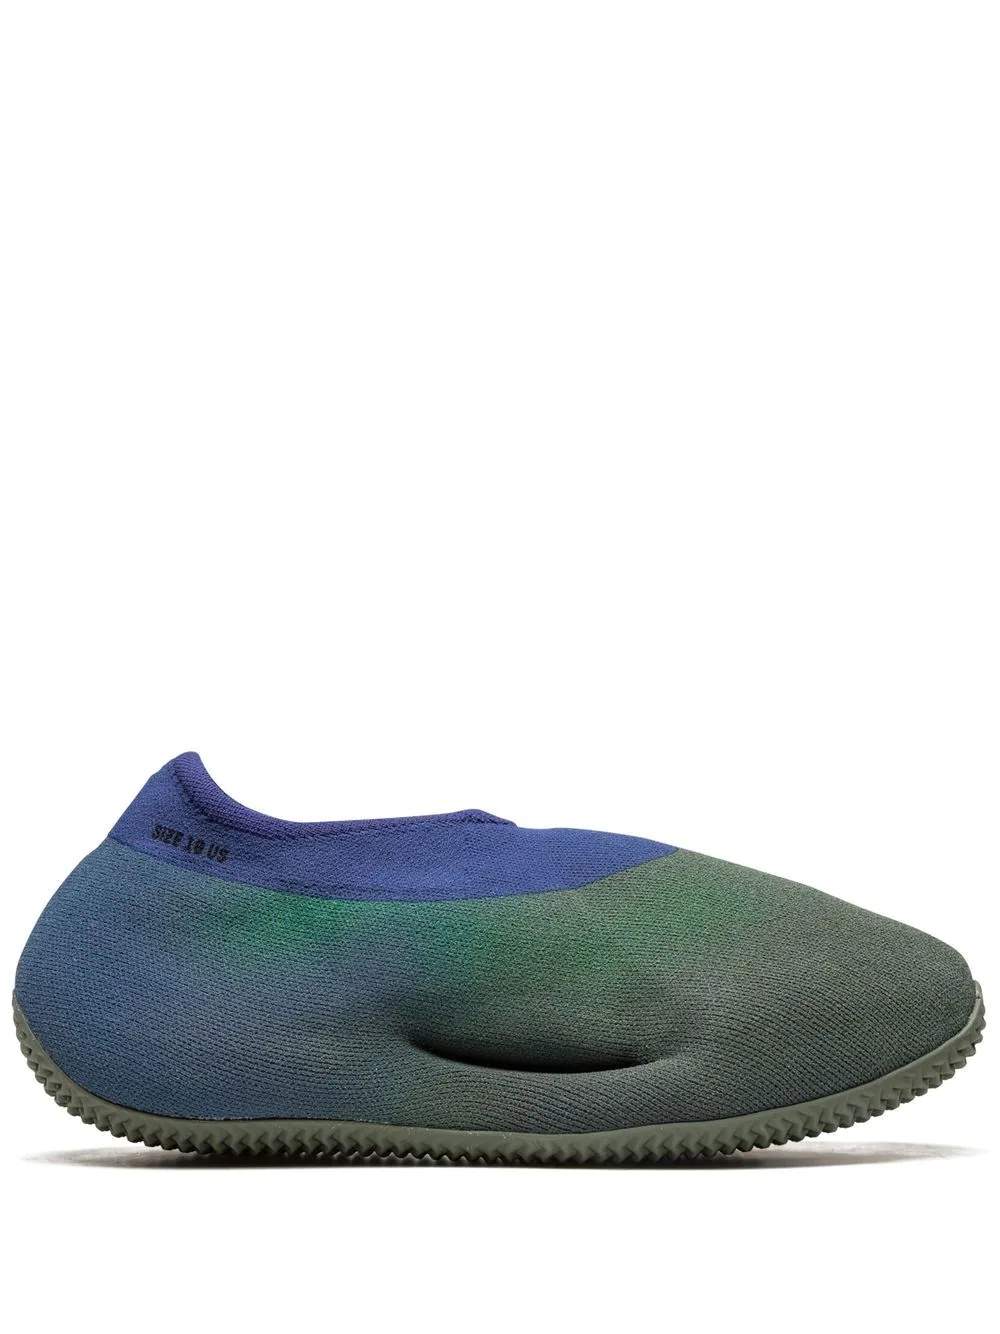 YEEZY Knit Runner "Faded Azure" sneakers - 1